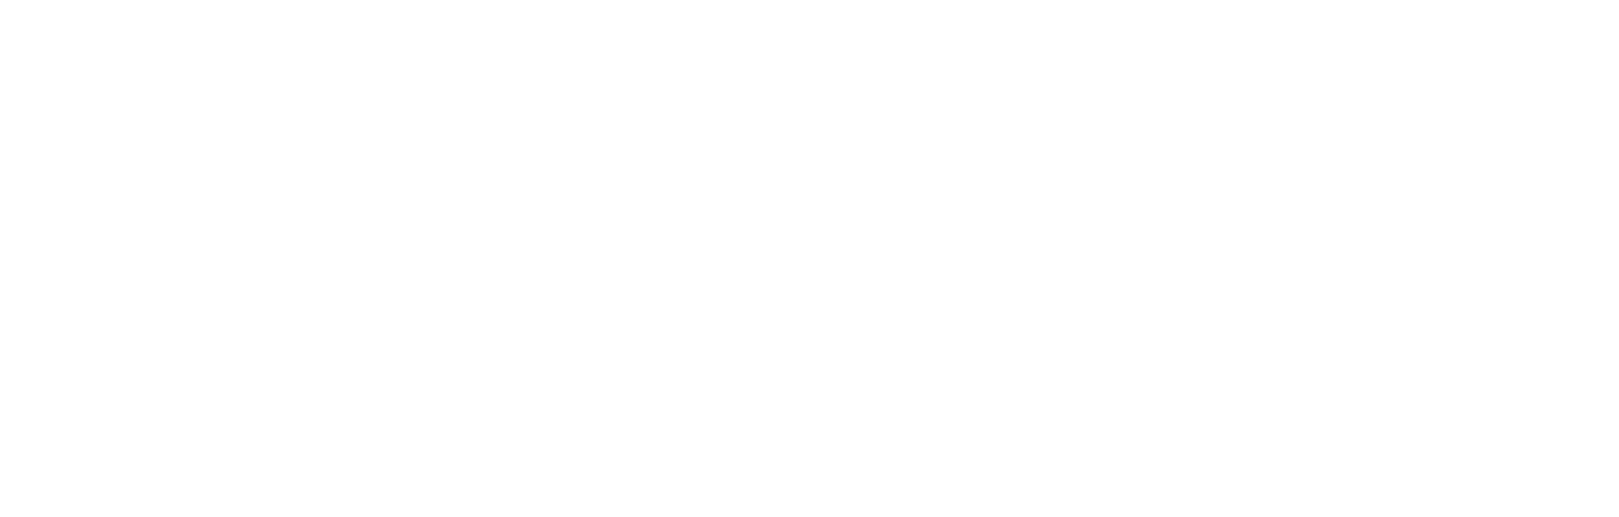 Lincoln National Corporation logo large for dark backgrounds (transparent PNG)